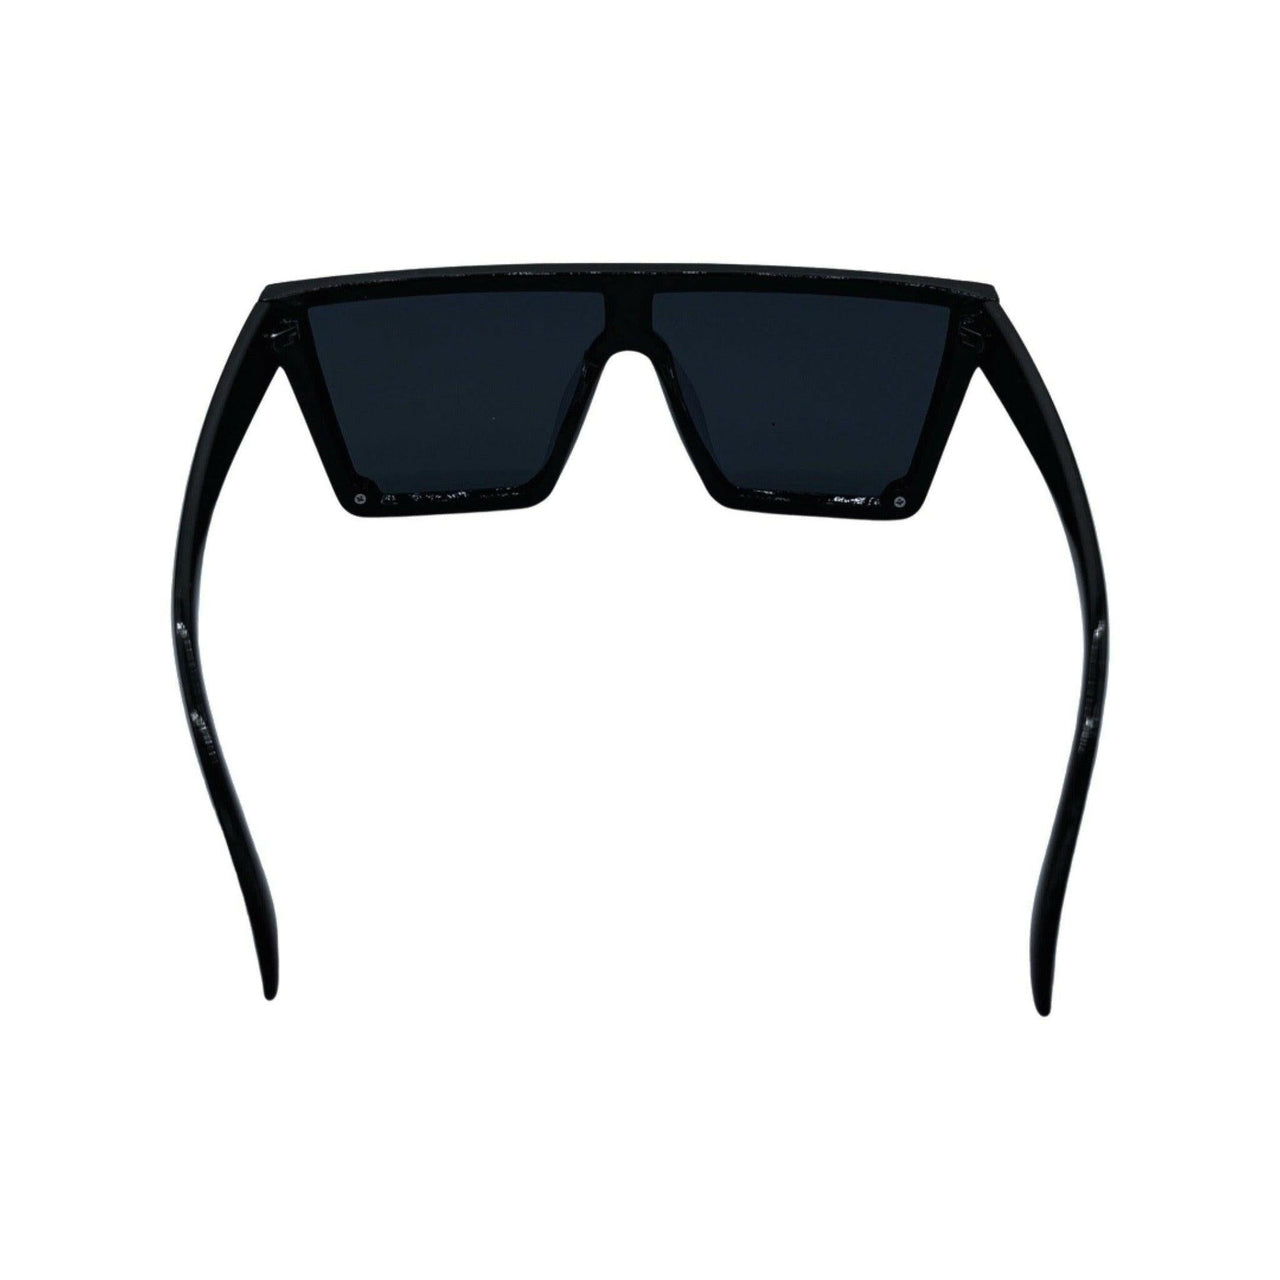 Black OG Sunglasses - Rebel Reaper Clothing Company Sunglasses